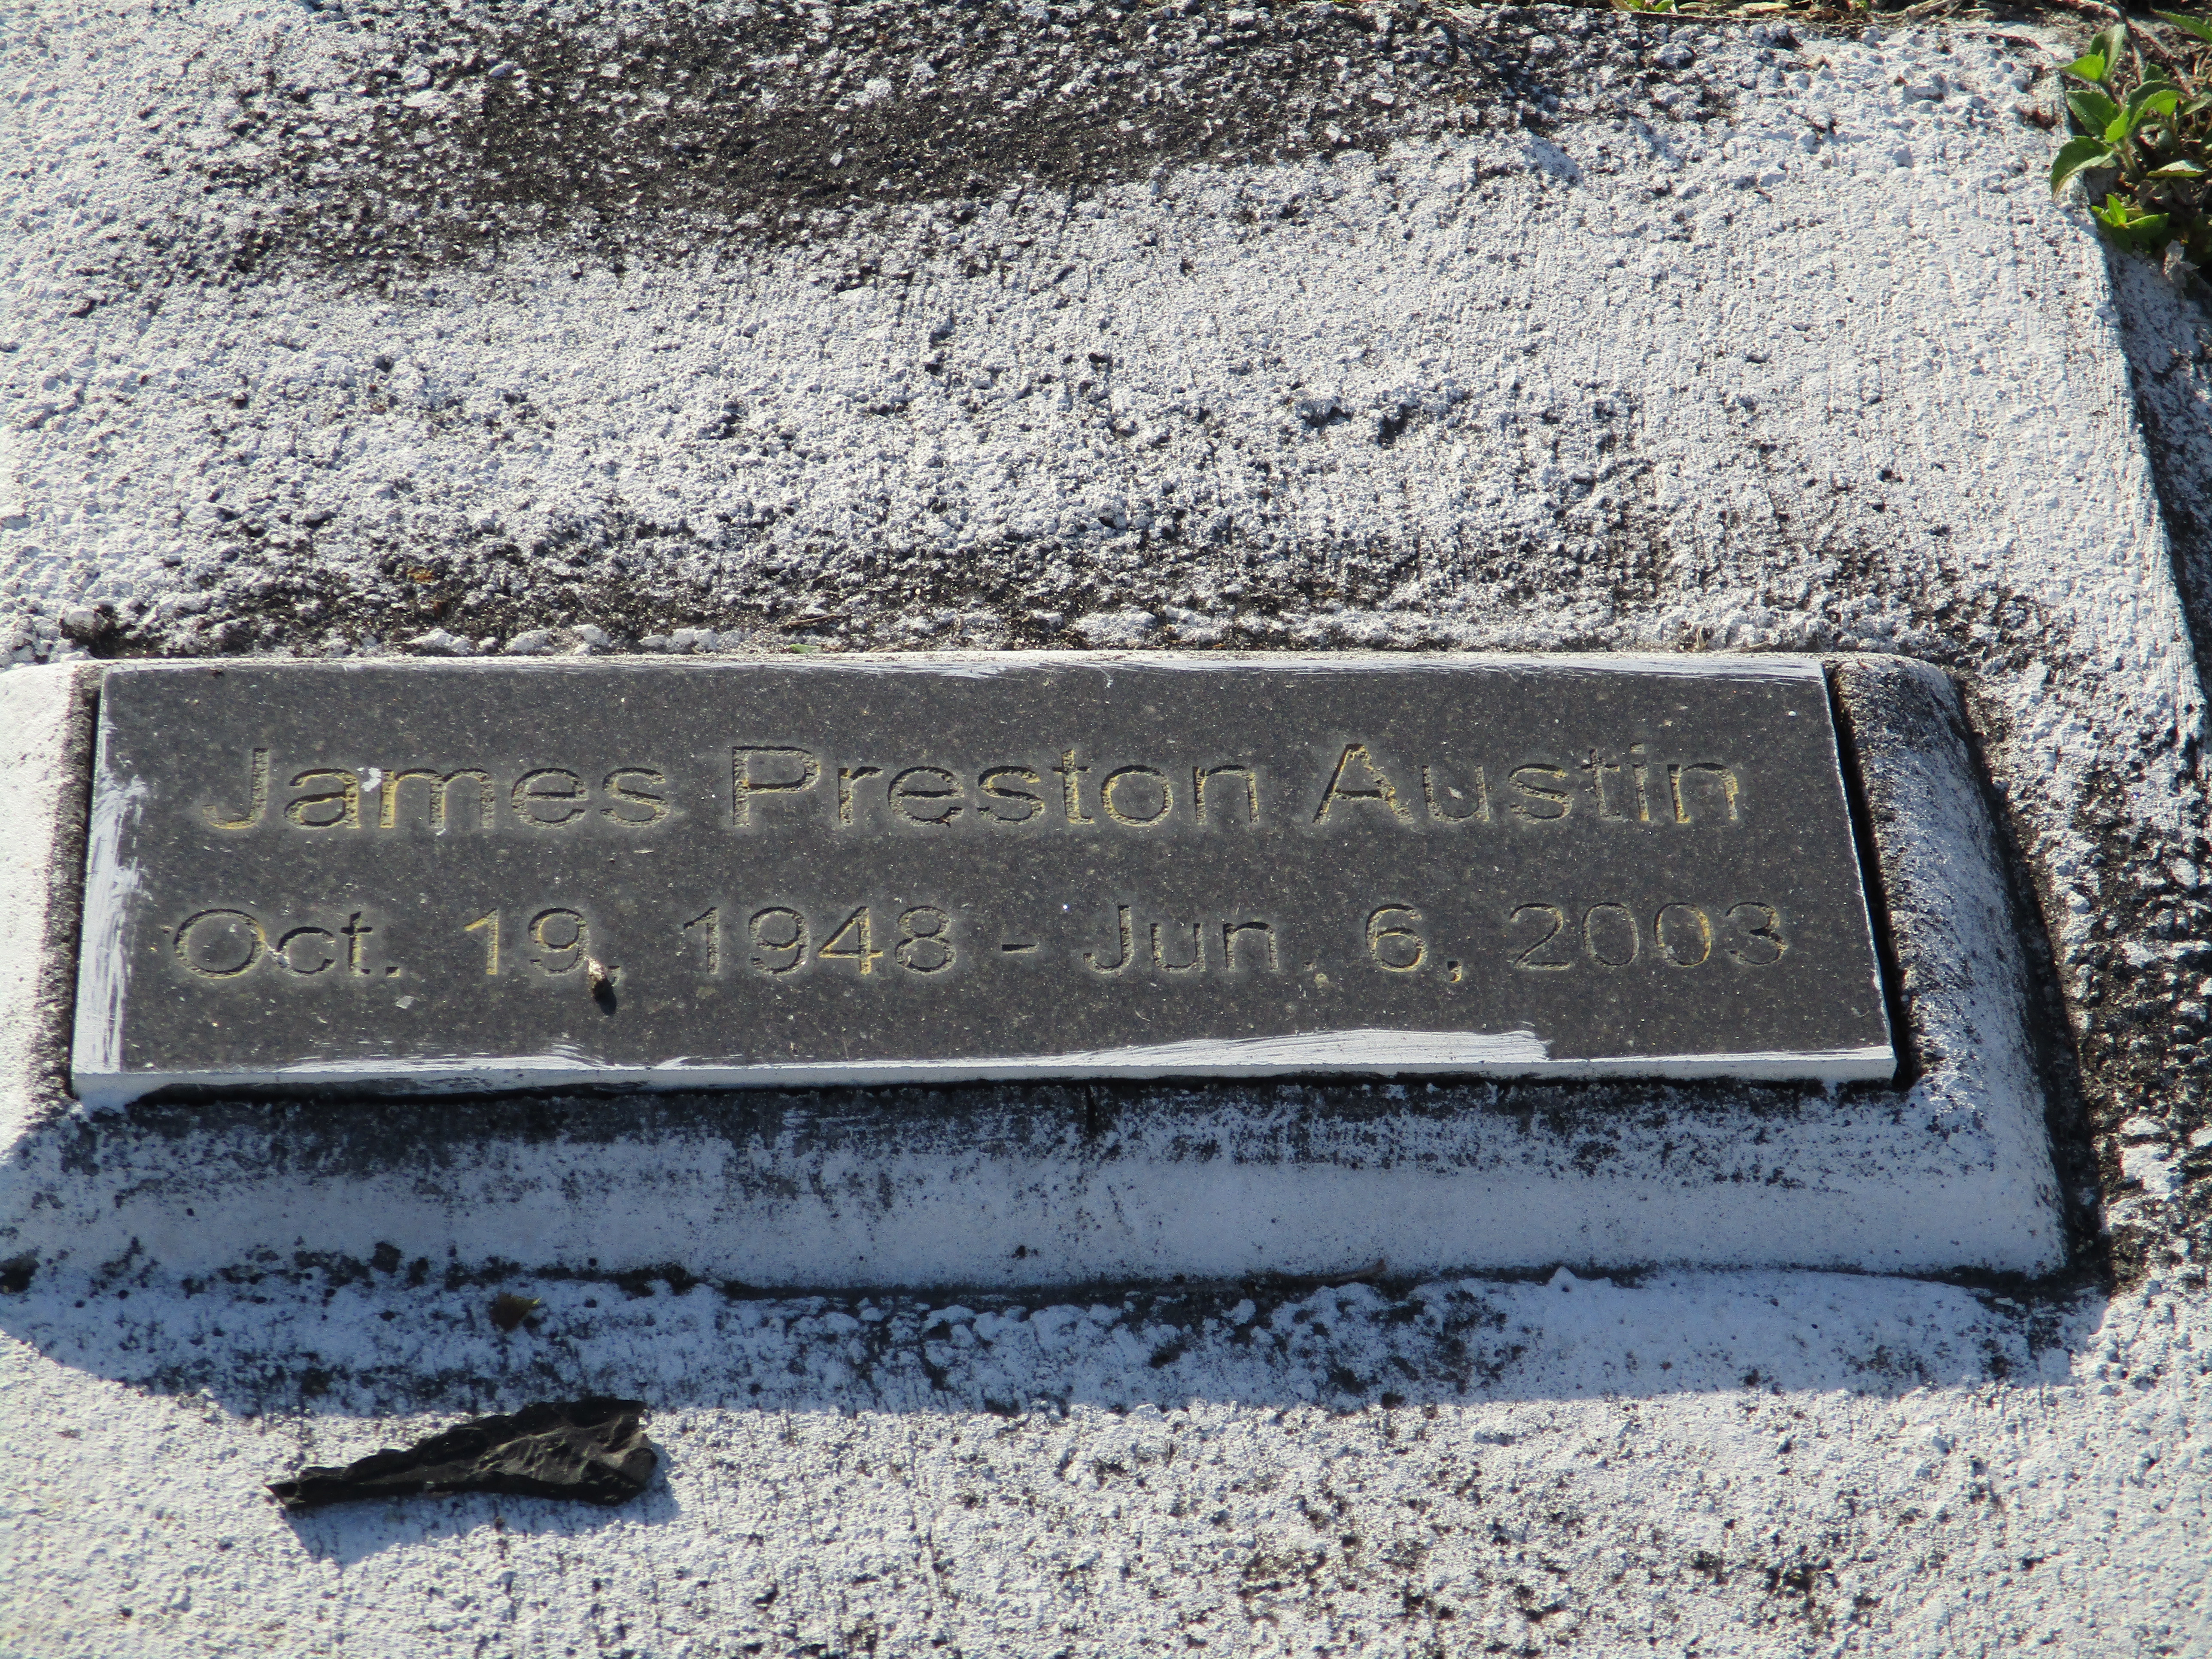 James Preston Austin